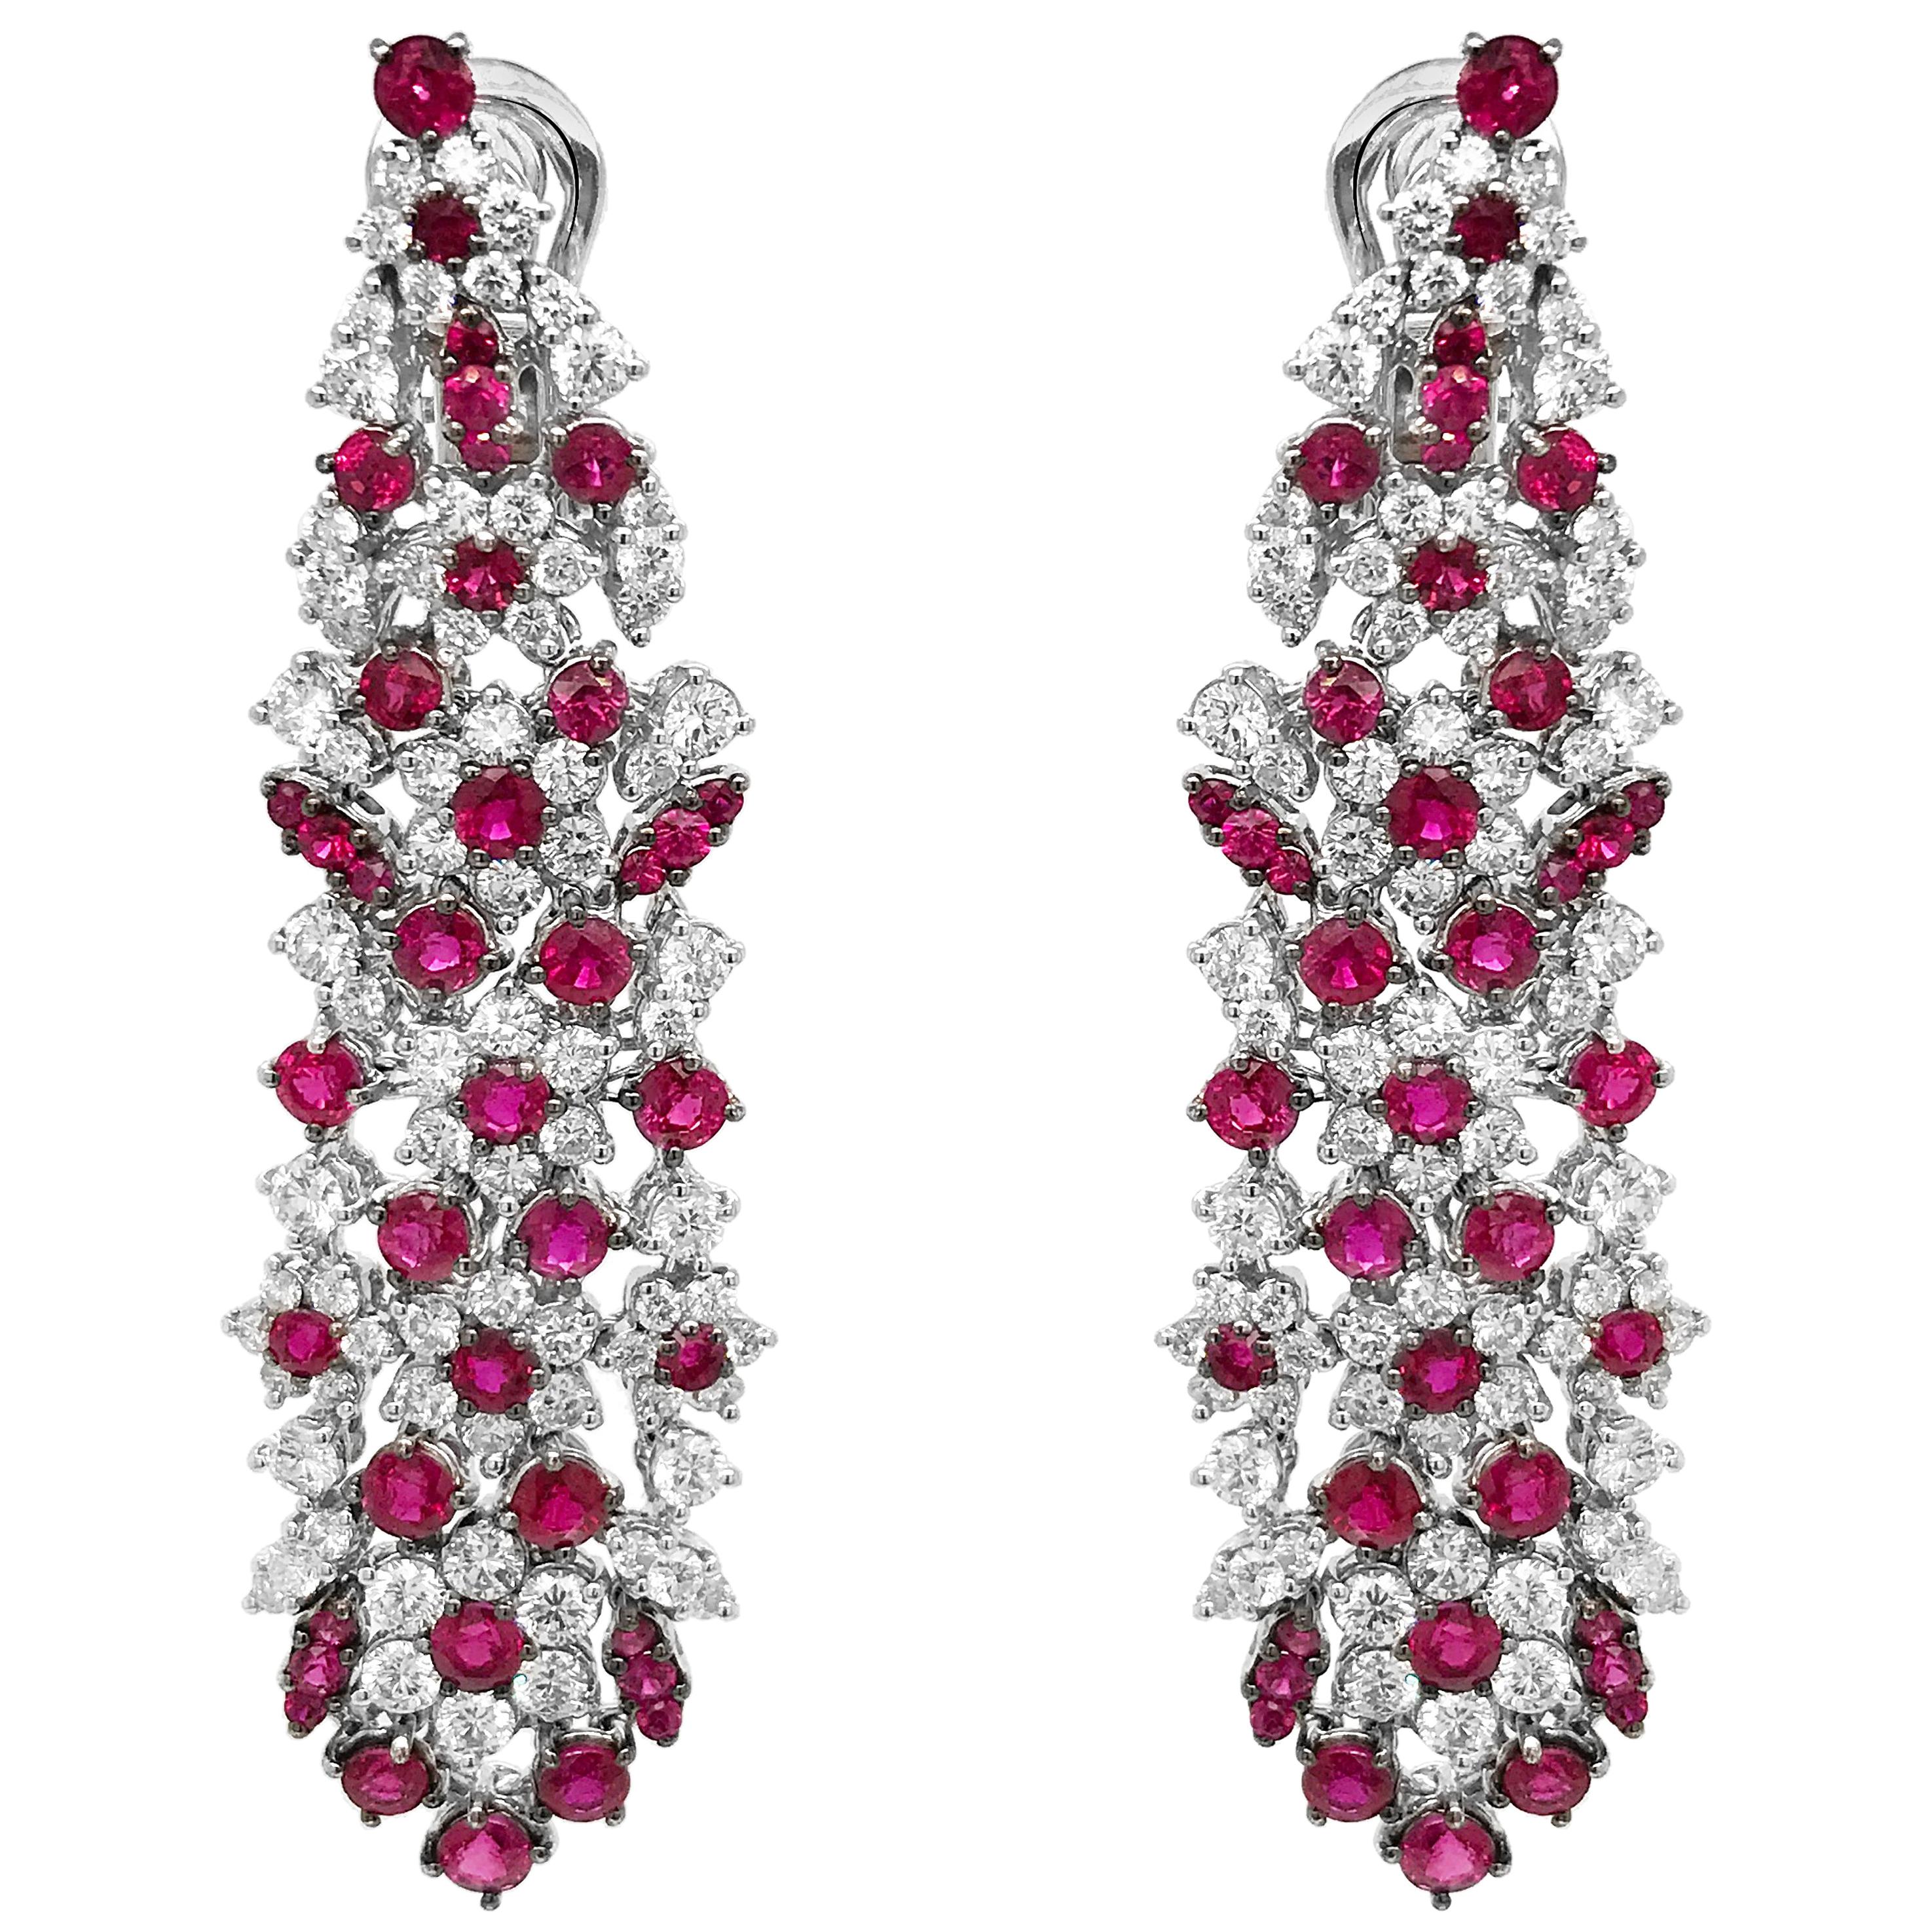 Pair of Ruby and Diamond Earrings